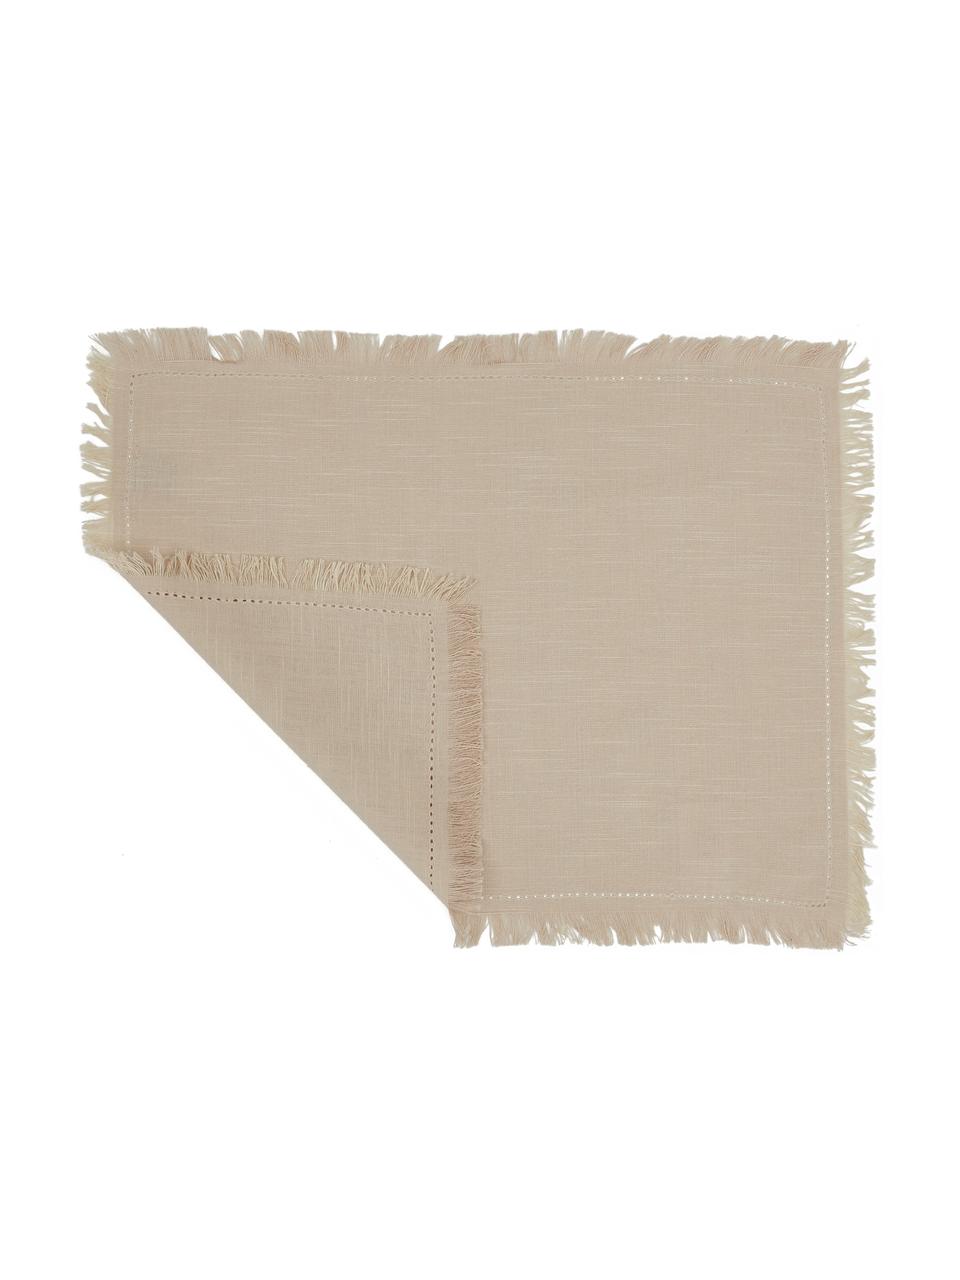 Manteles individuales de algodón con flecos Henley, 2 uds., 100% algodón, Beige, An 35 x L 45 cm